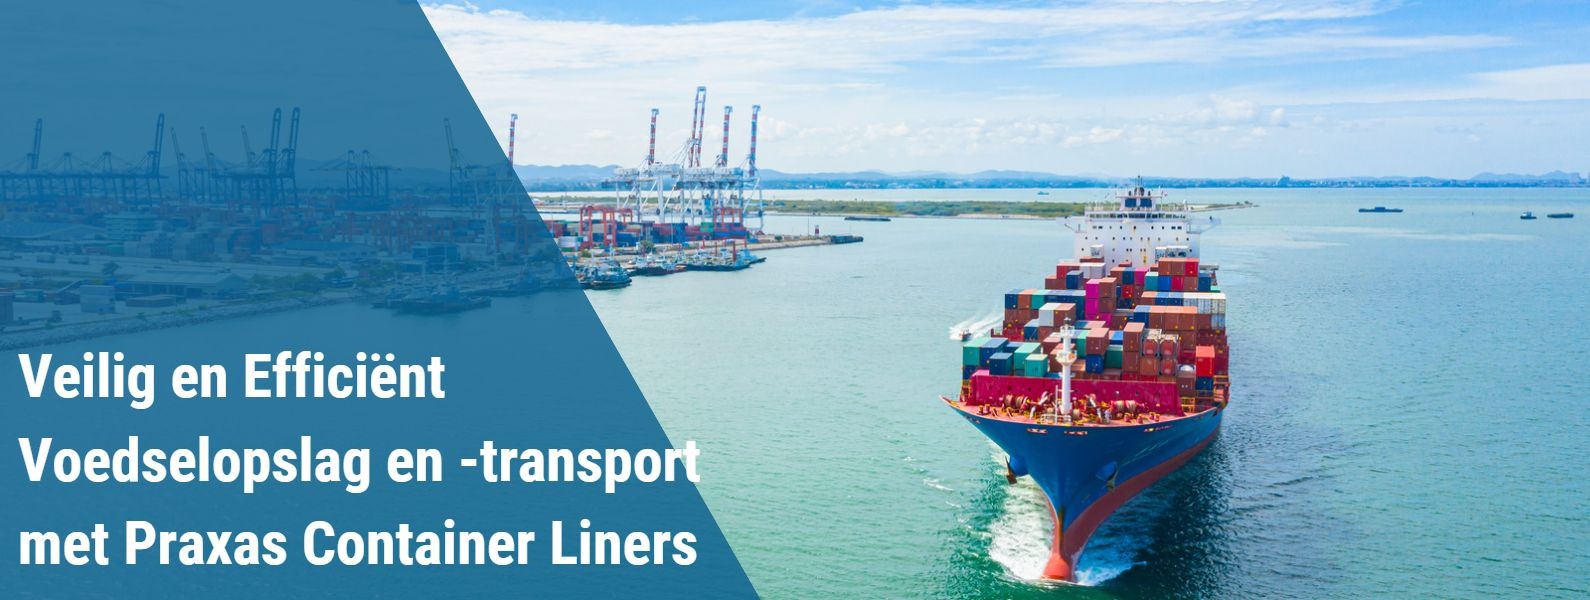 Veilig en Efficiënt Voedselopslag en -transport met Praxas Container Liners